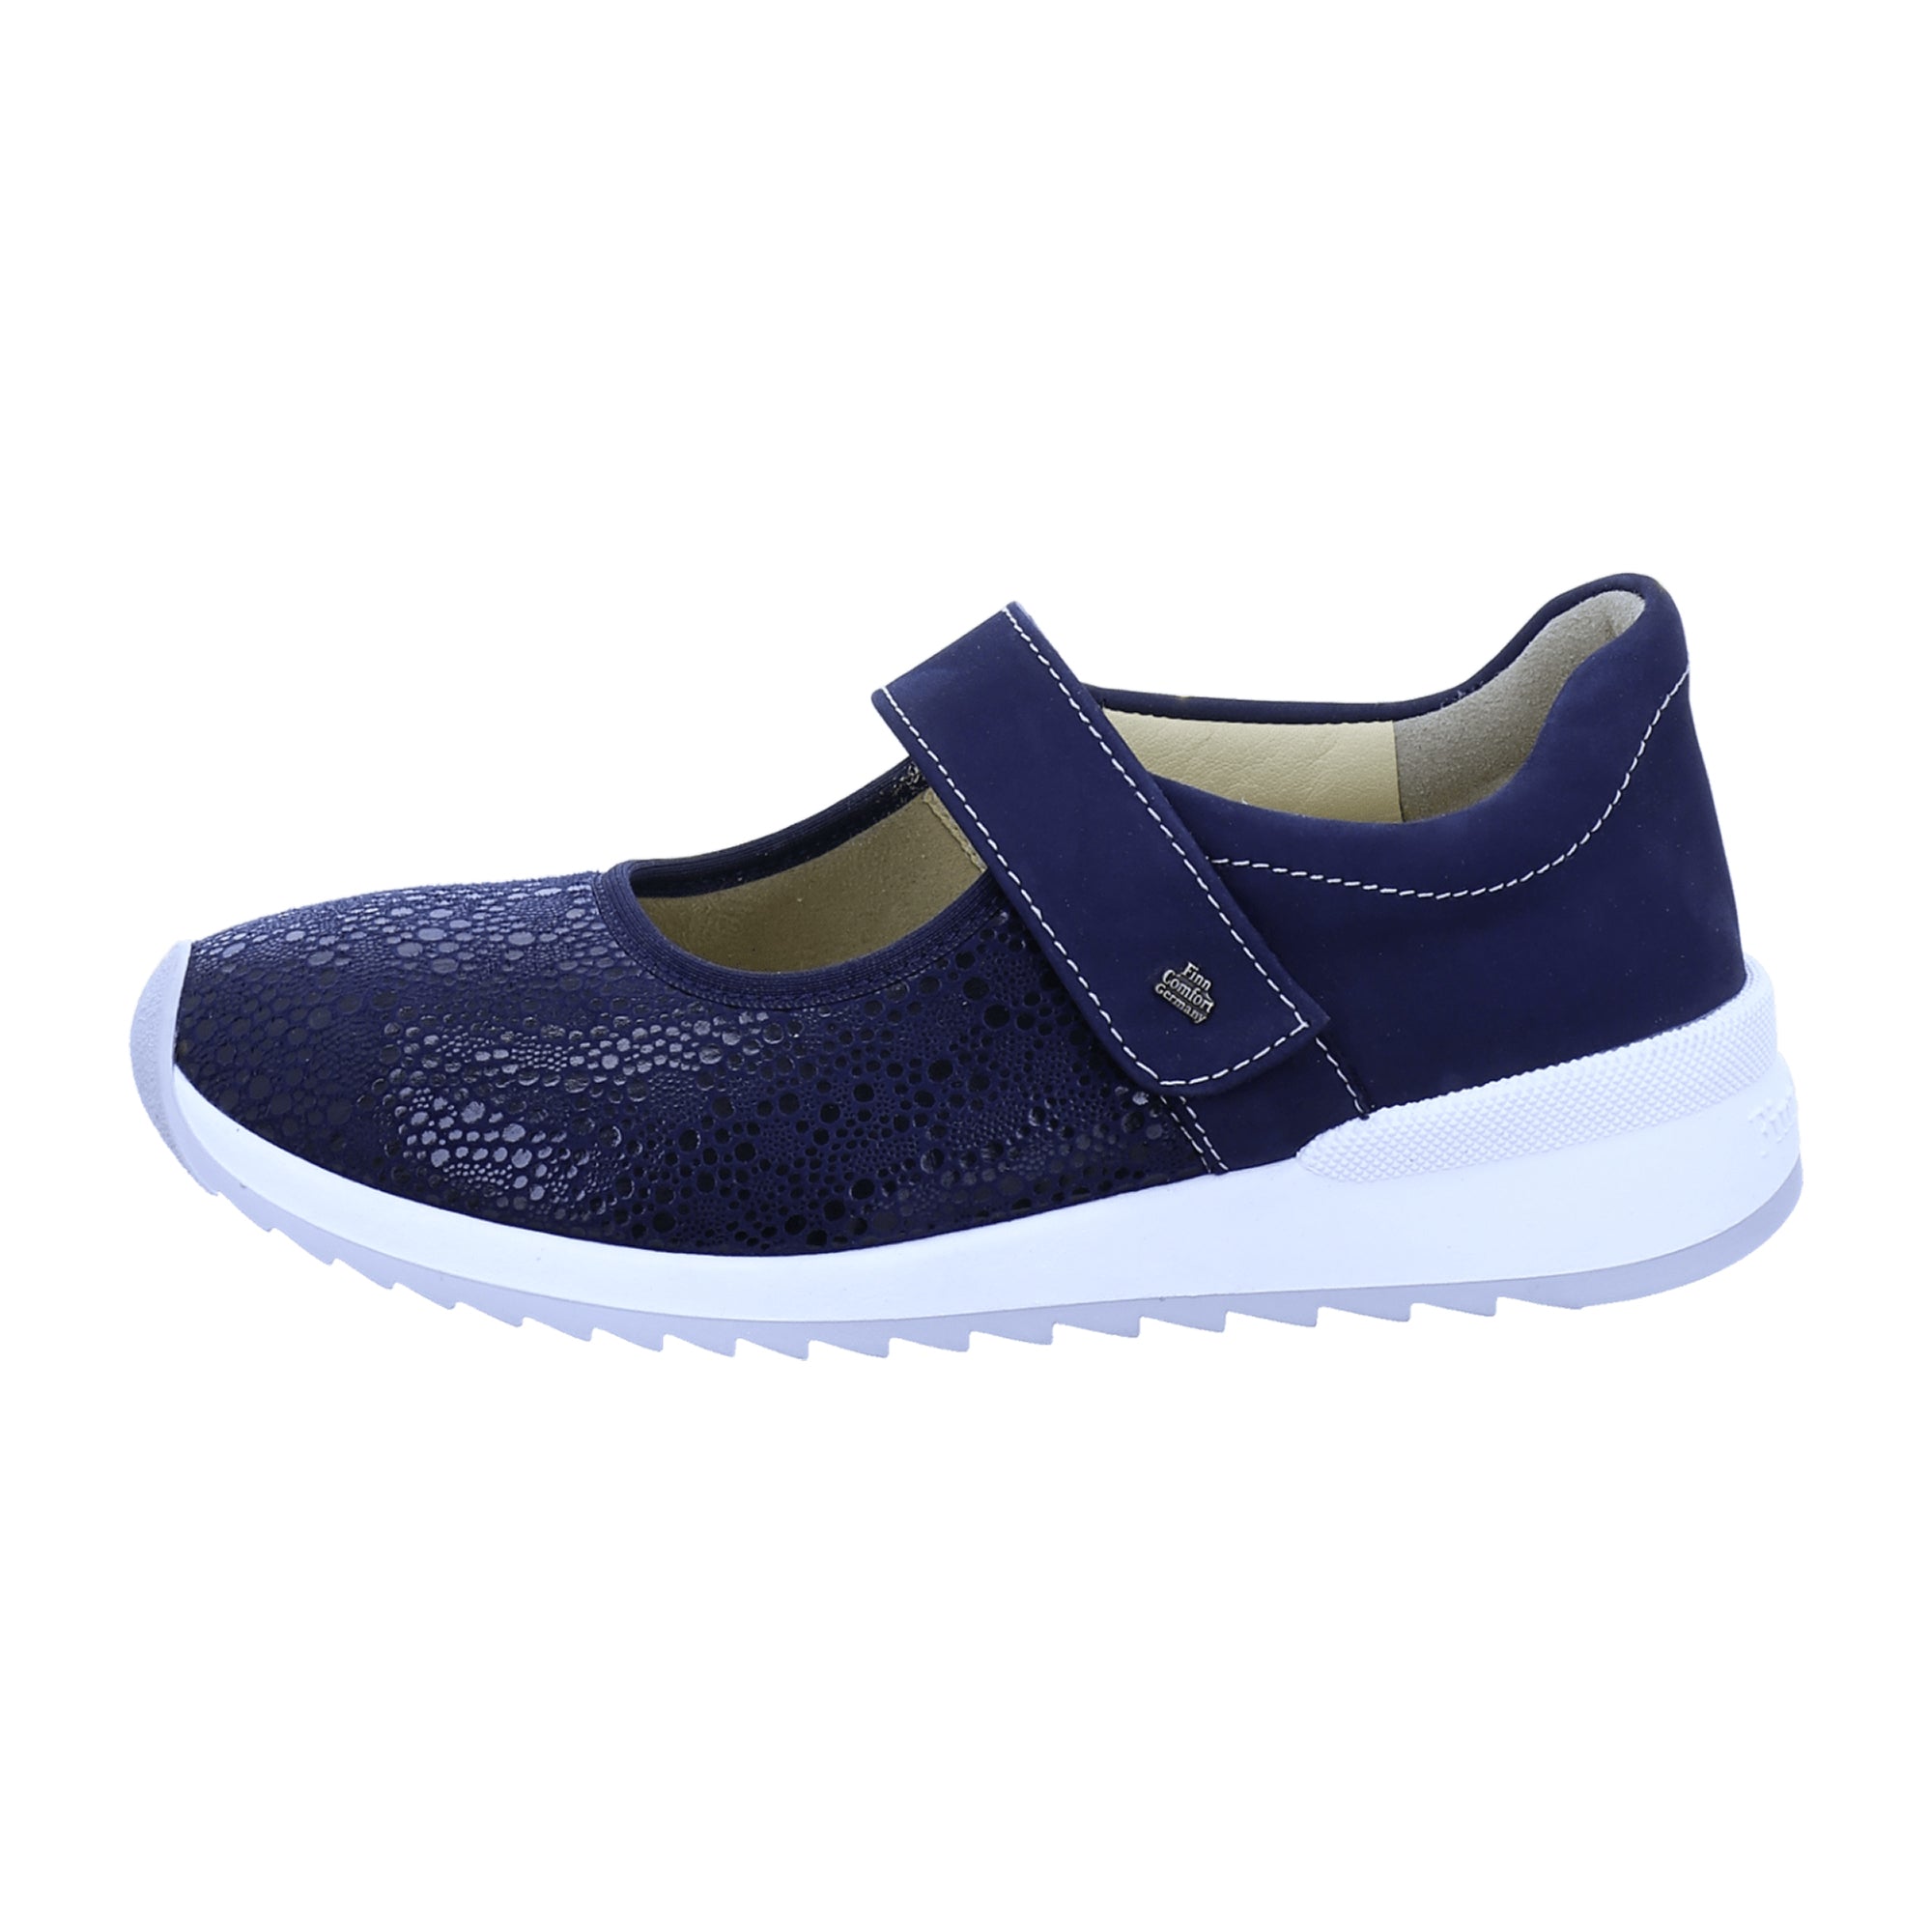 Finn Comfort Assenza Women's Comfort Shoes - Stylish Blue Leather